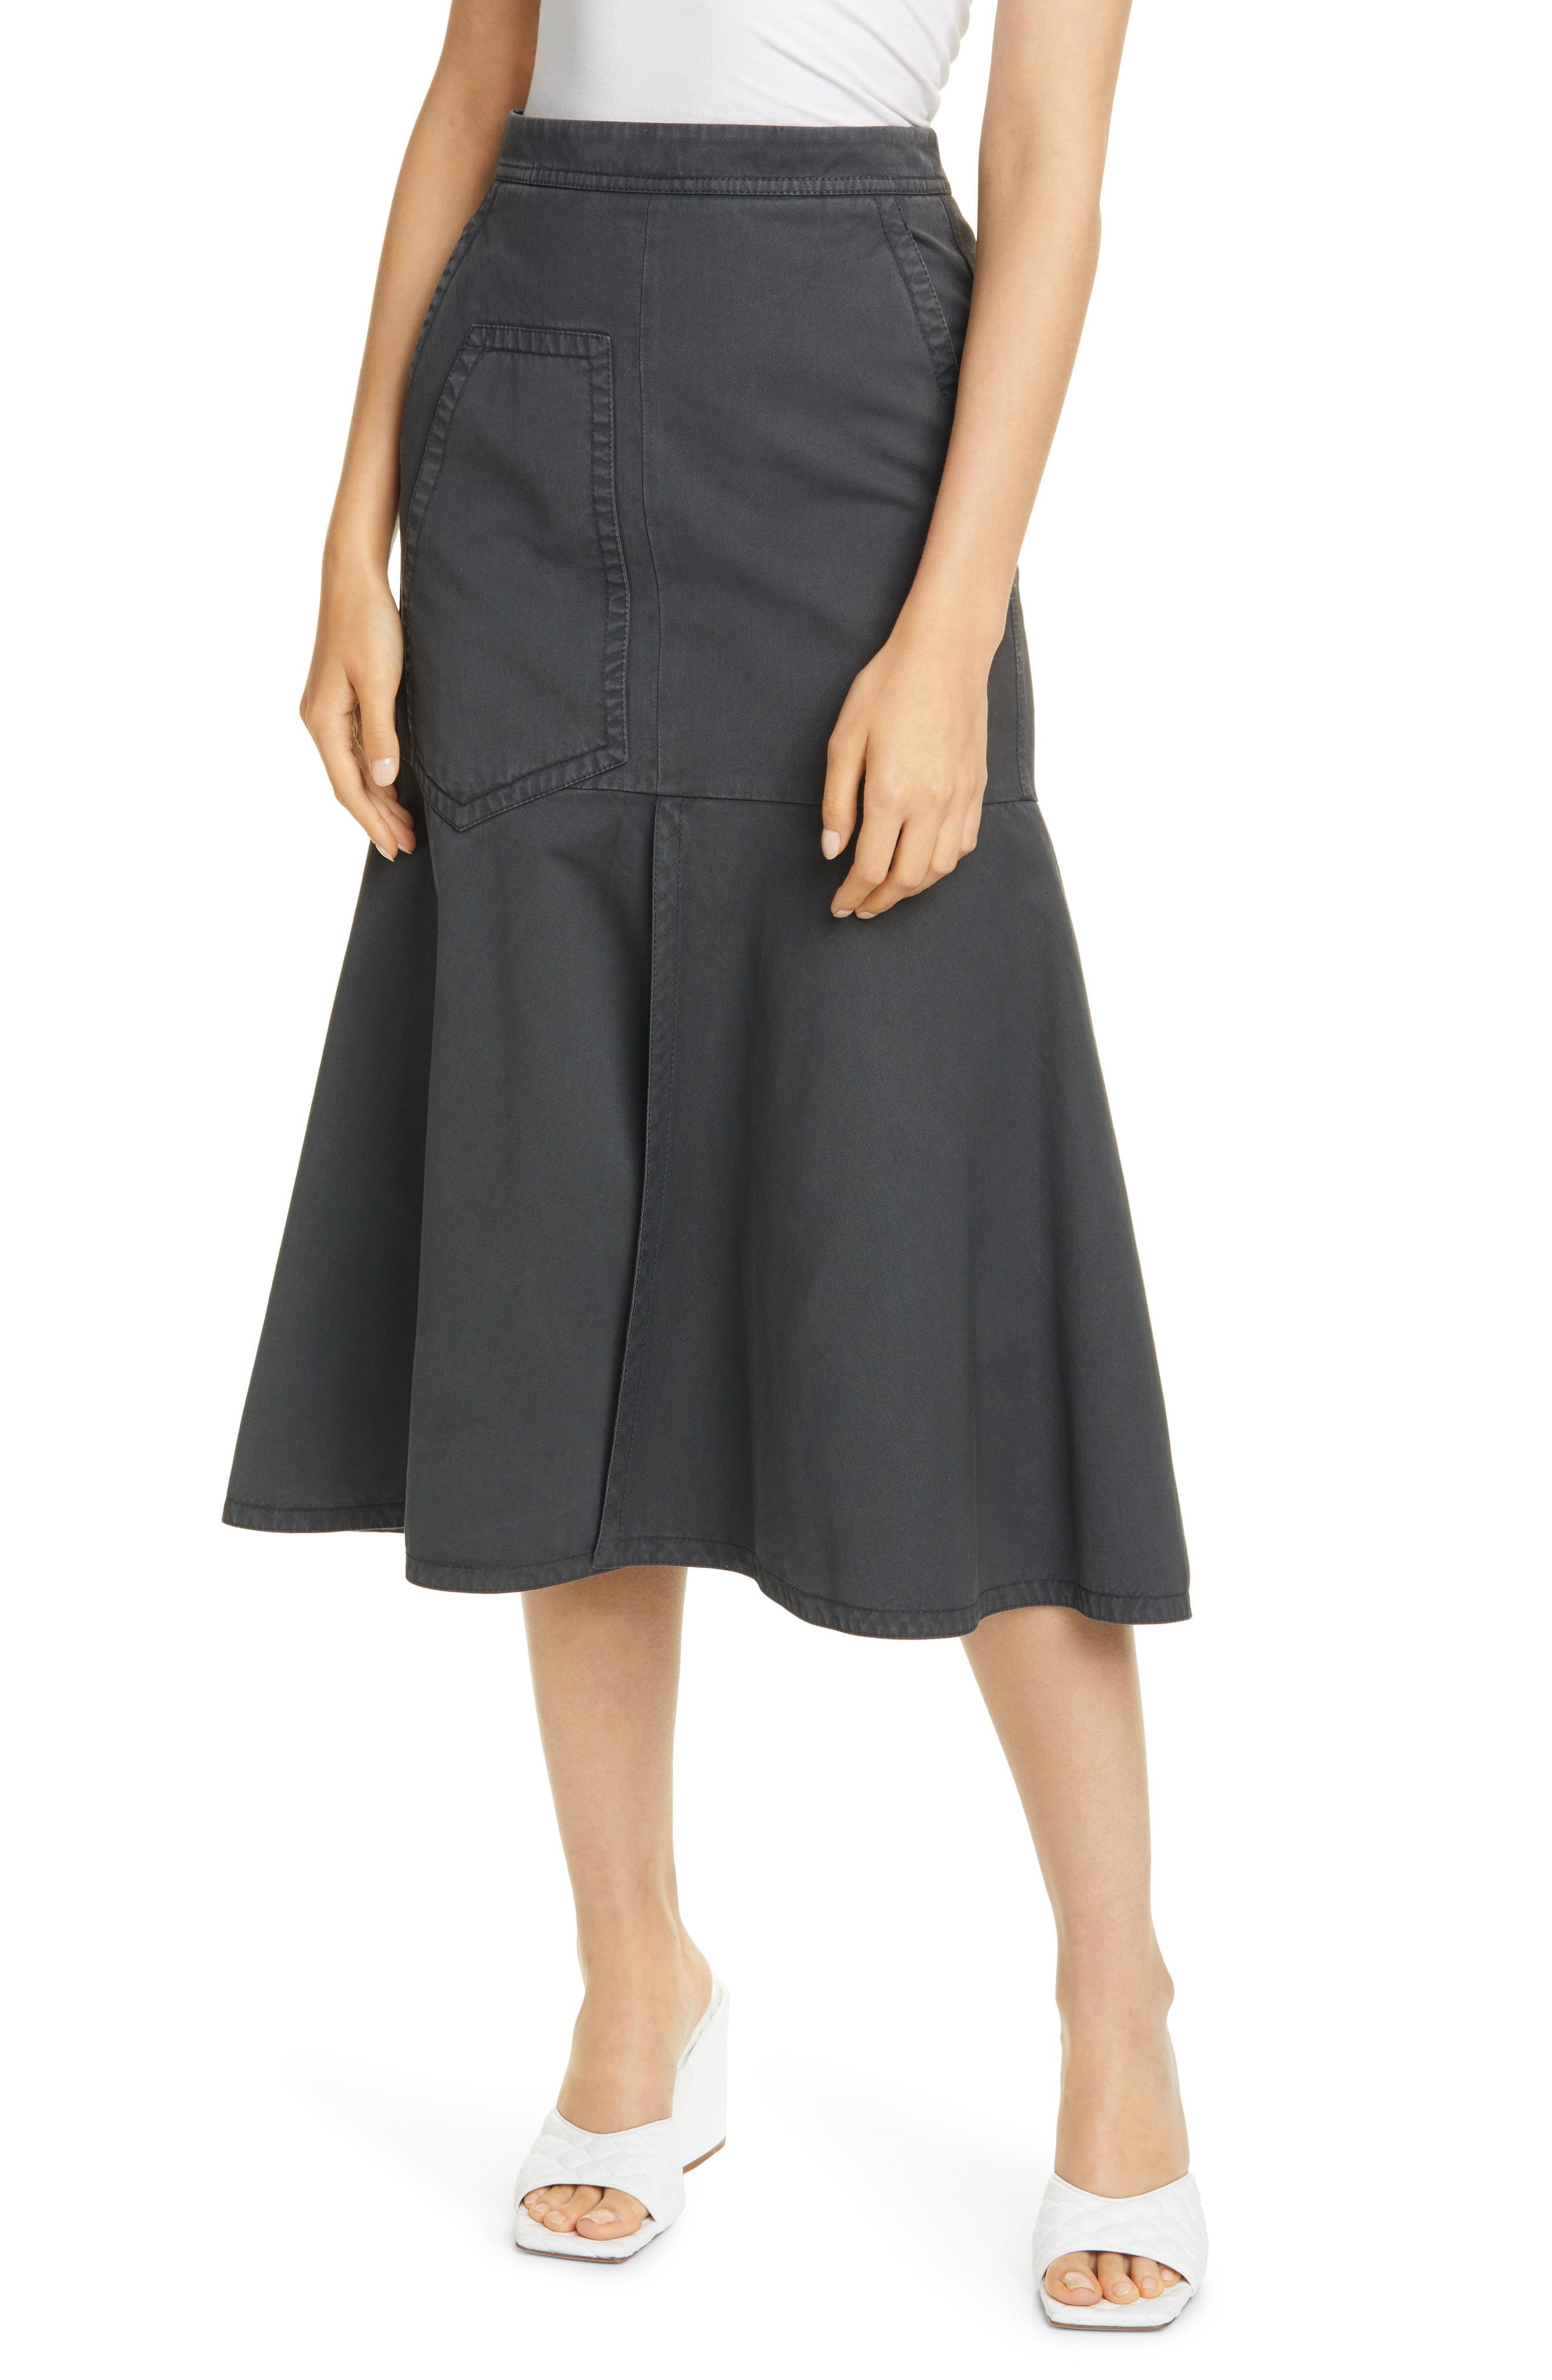 Tibi Garment Dyed Twill Midi Skirt in Gray - Lyst